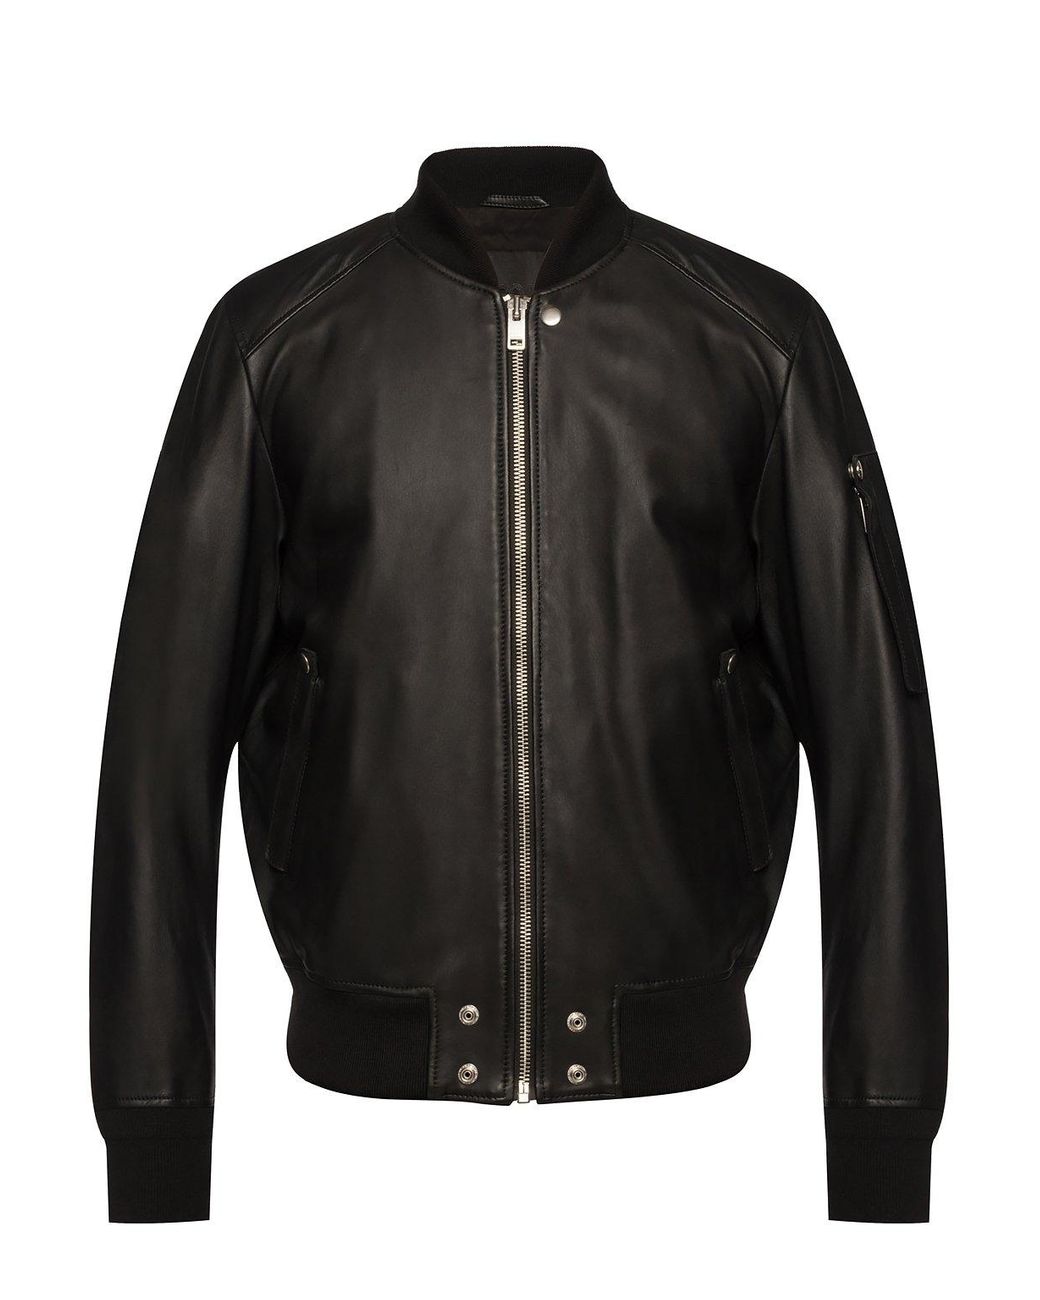 DIESEL Leather Bomber Jacket Black for Men - Lyst